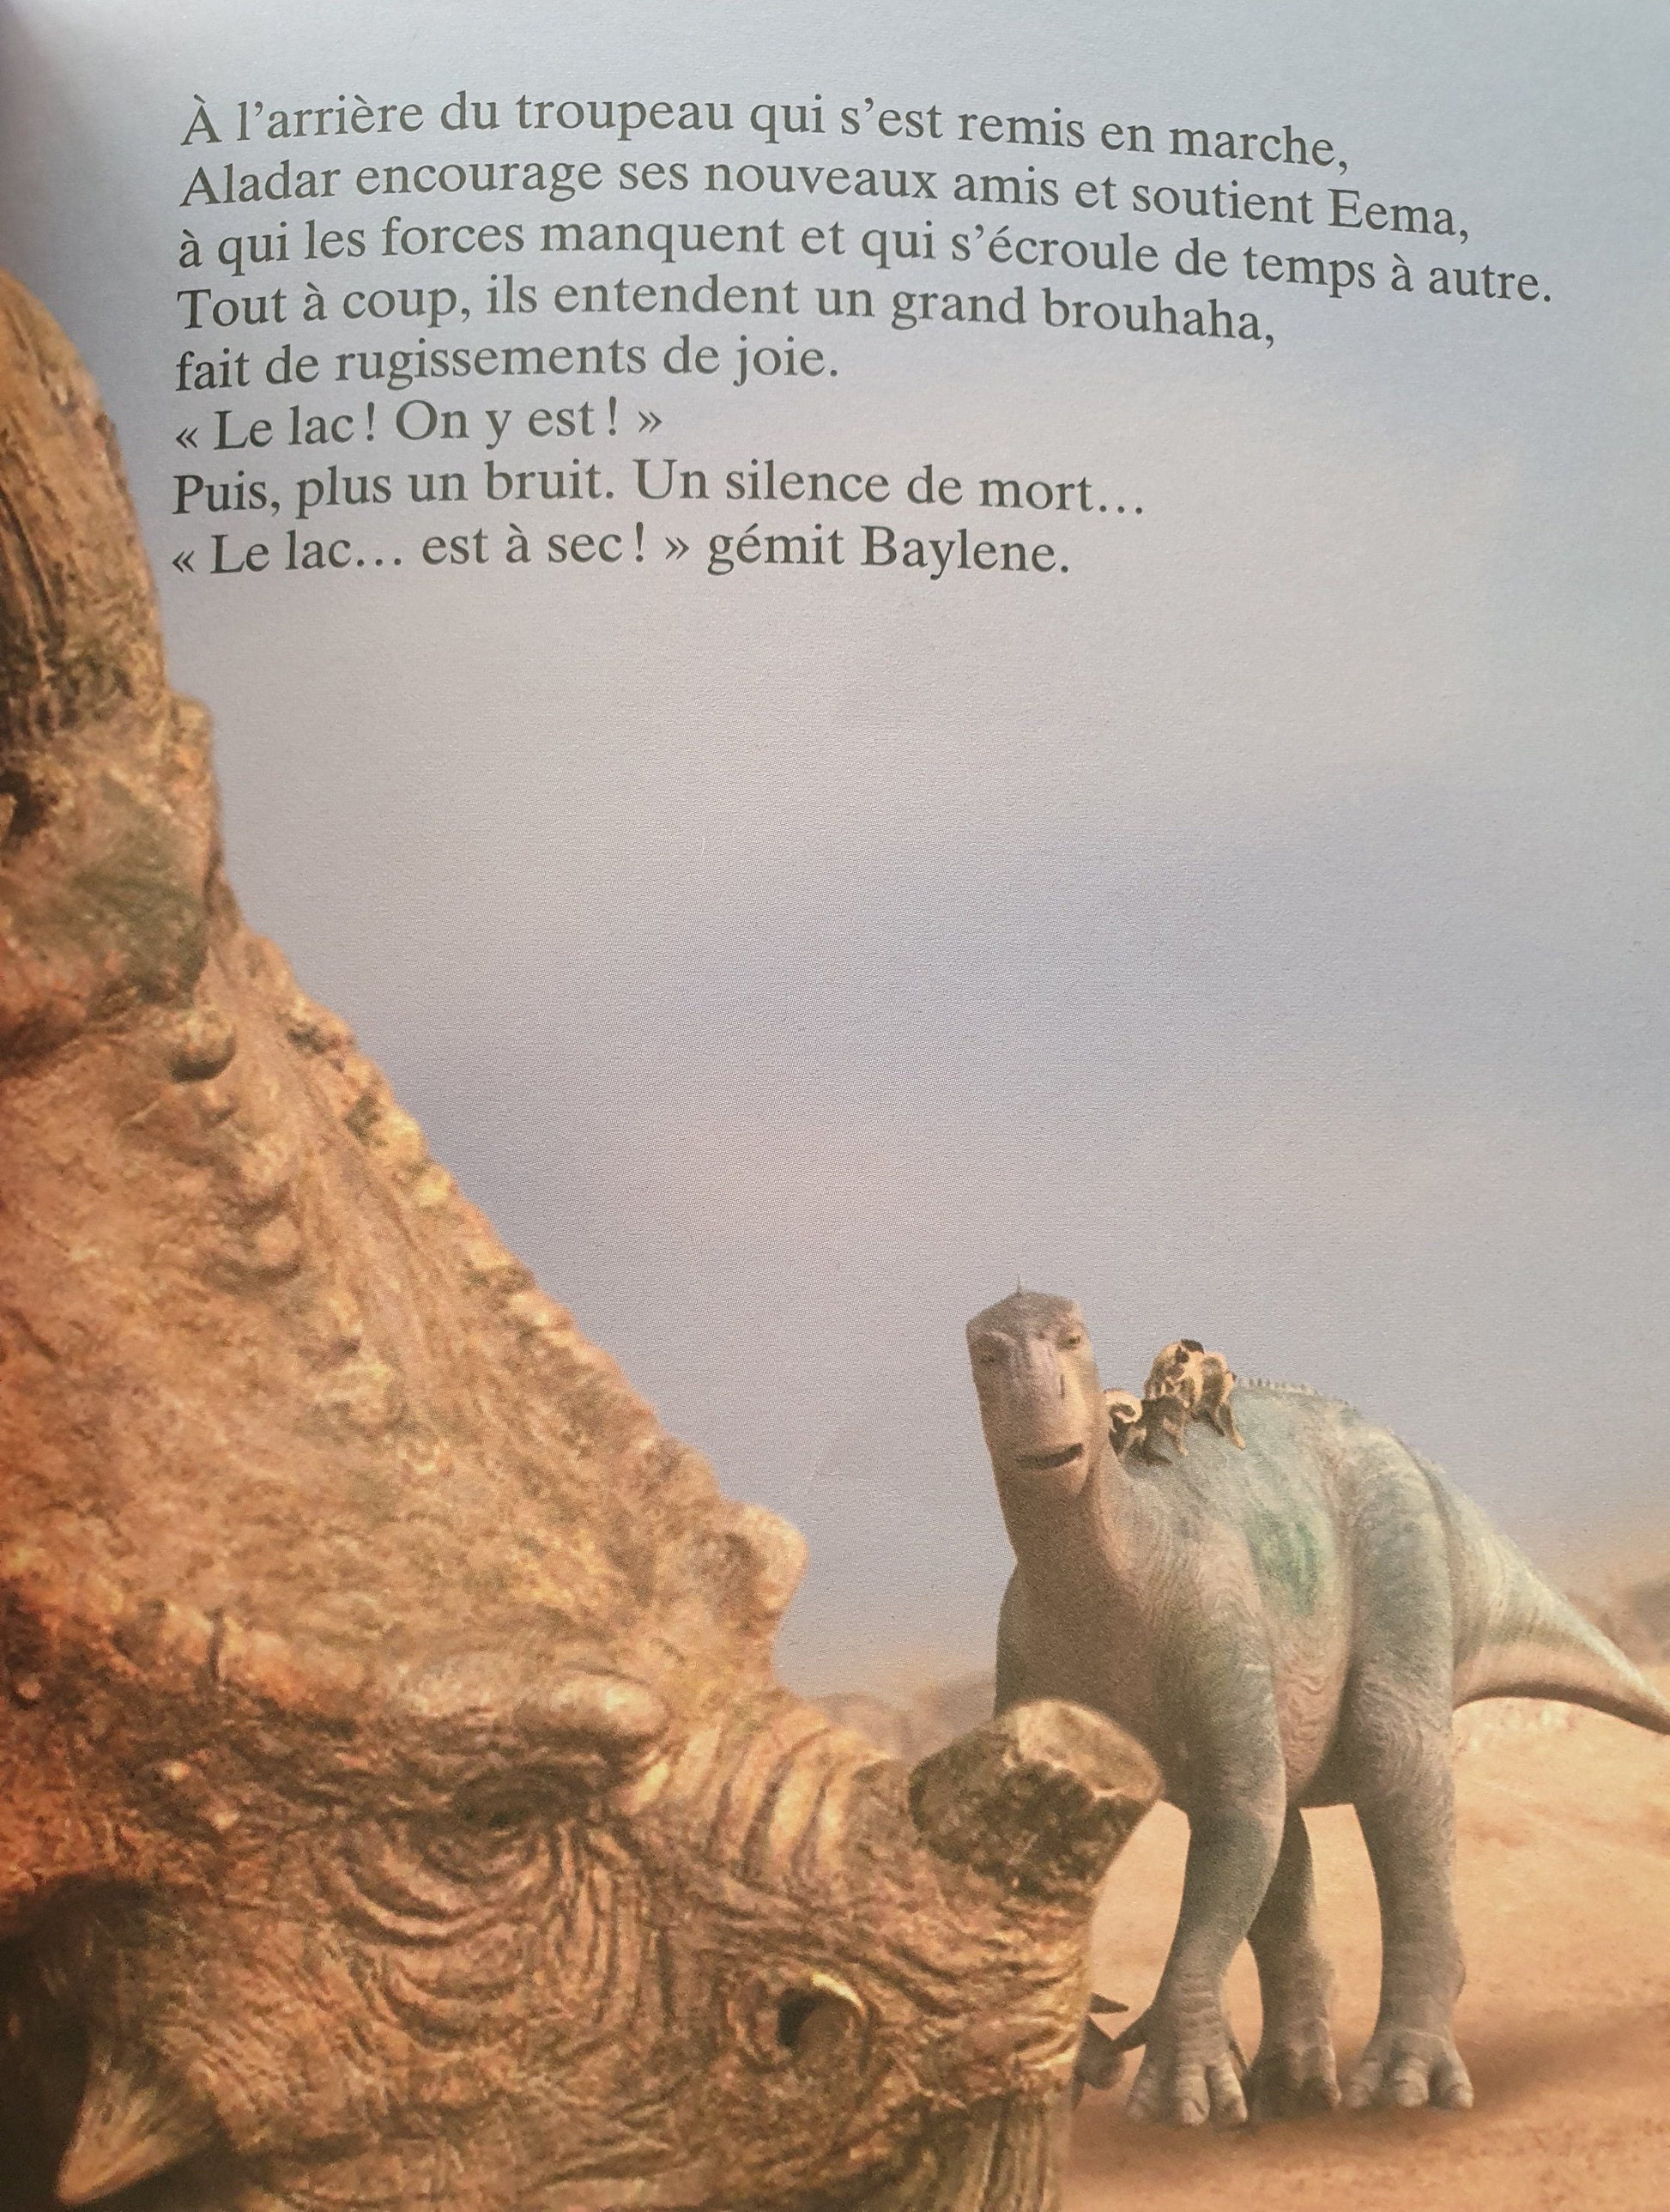 Les Classiques - Dinosaure Well Read, 3-6 yrs Disney  (6688597803193)